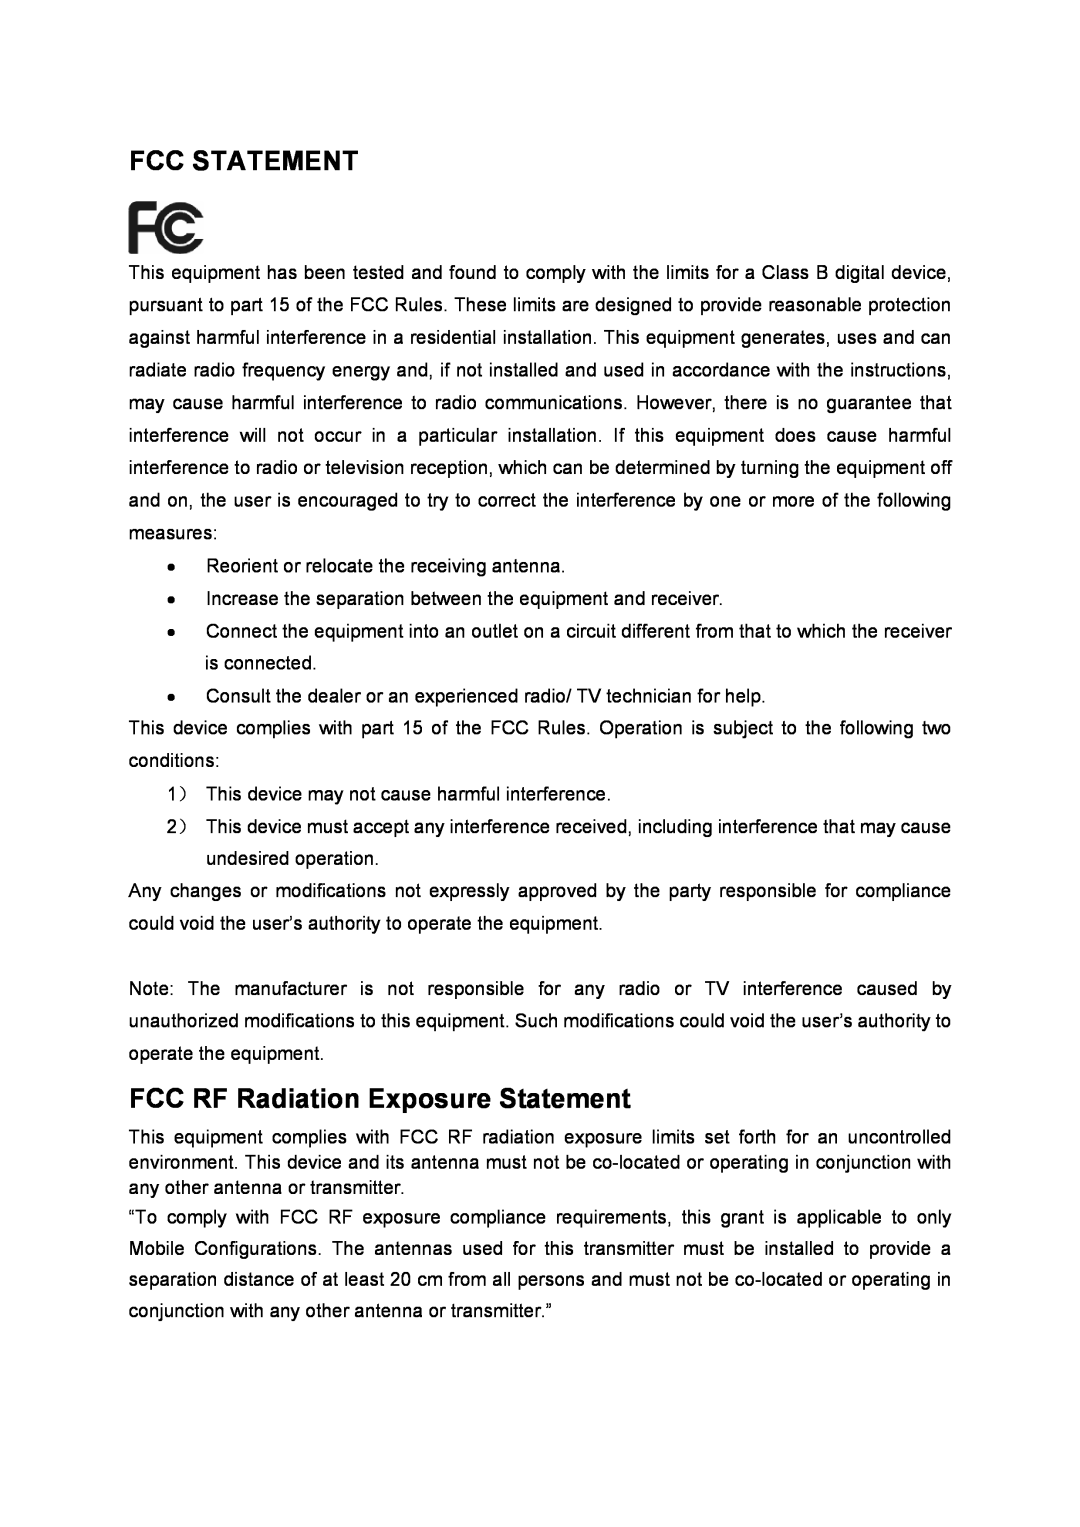 TP-Link td-w8951nd manual Fcc Statement, FCC RF Radiation Exposure Statement 